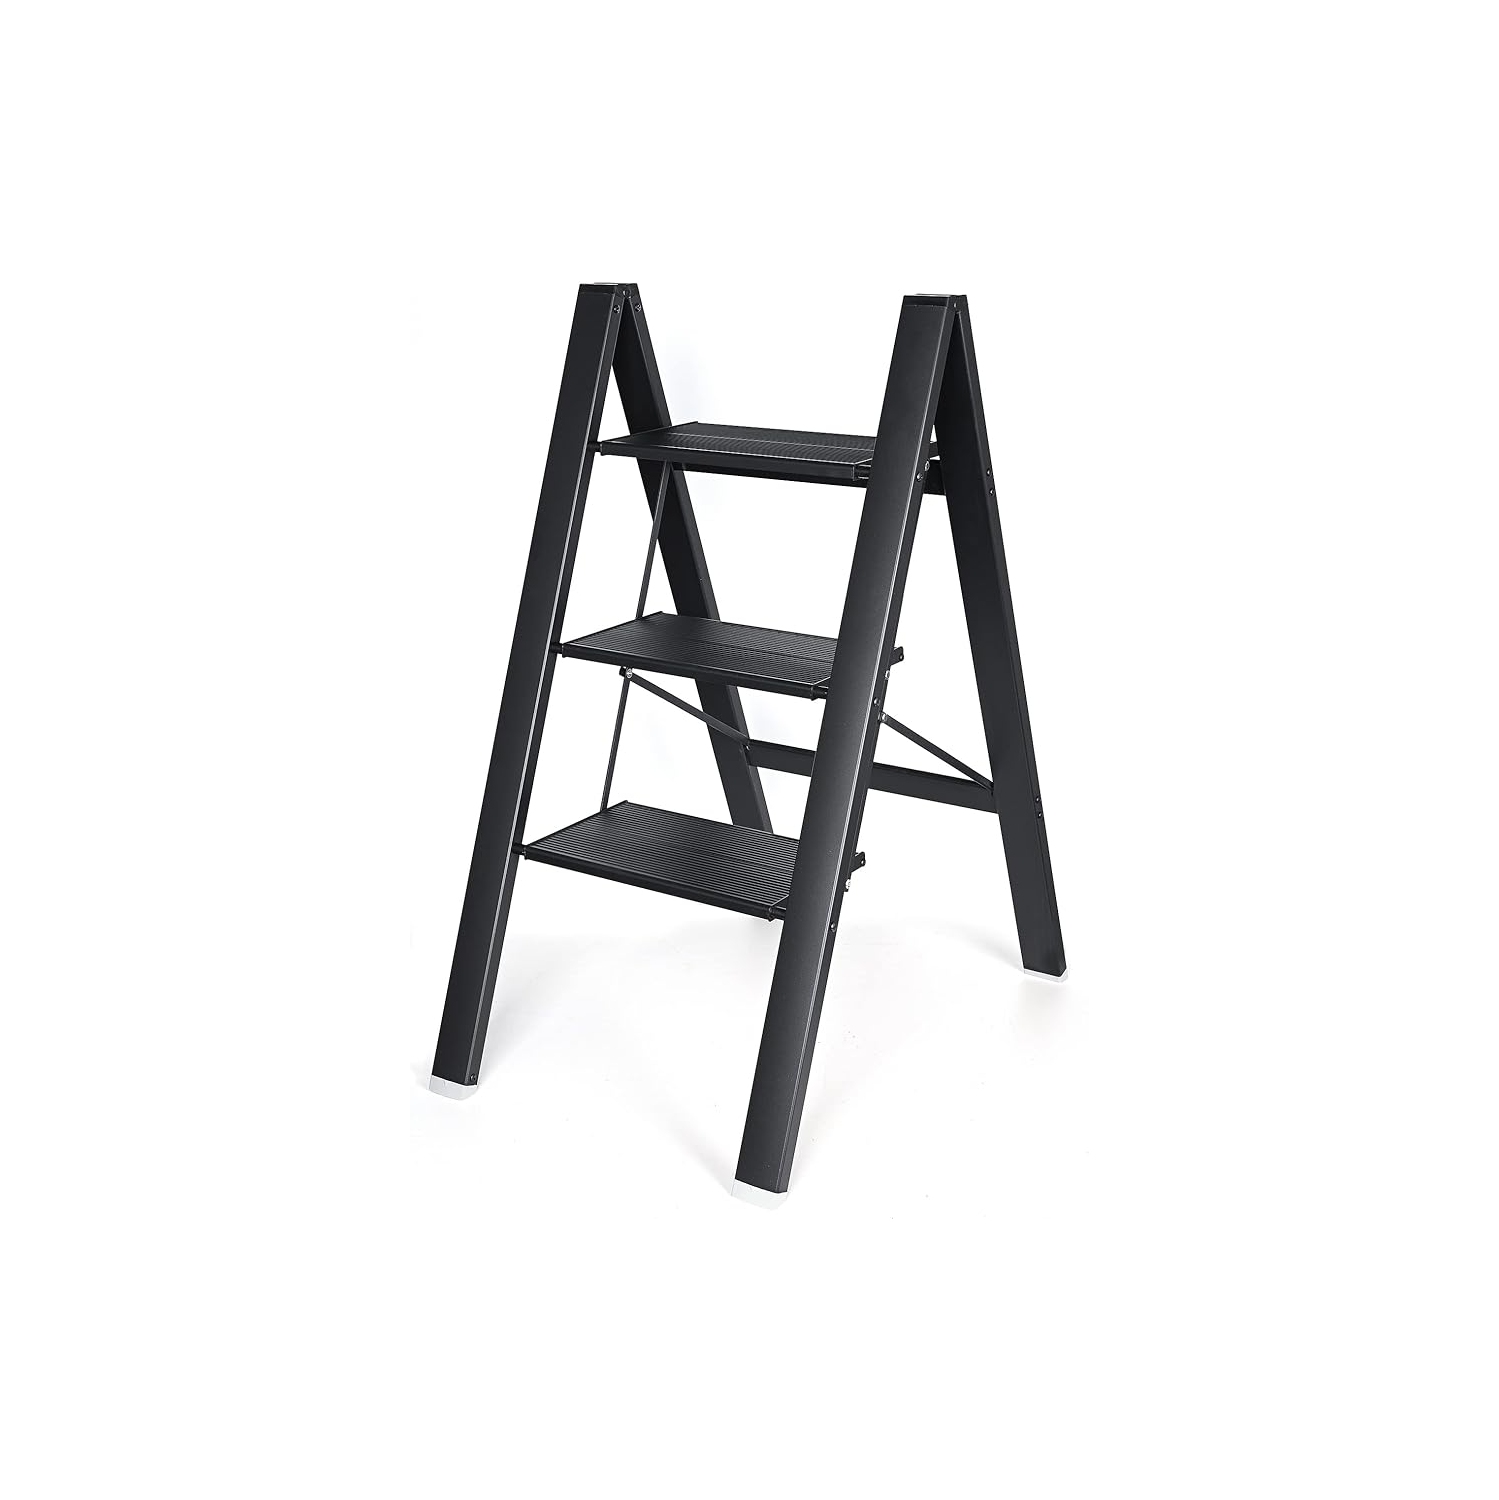 Lightweight Folding 3 Step Ladder 330lbs Loading, Aluminum Step Stool for Home Kitchen Office Garden Household